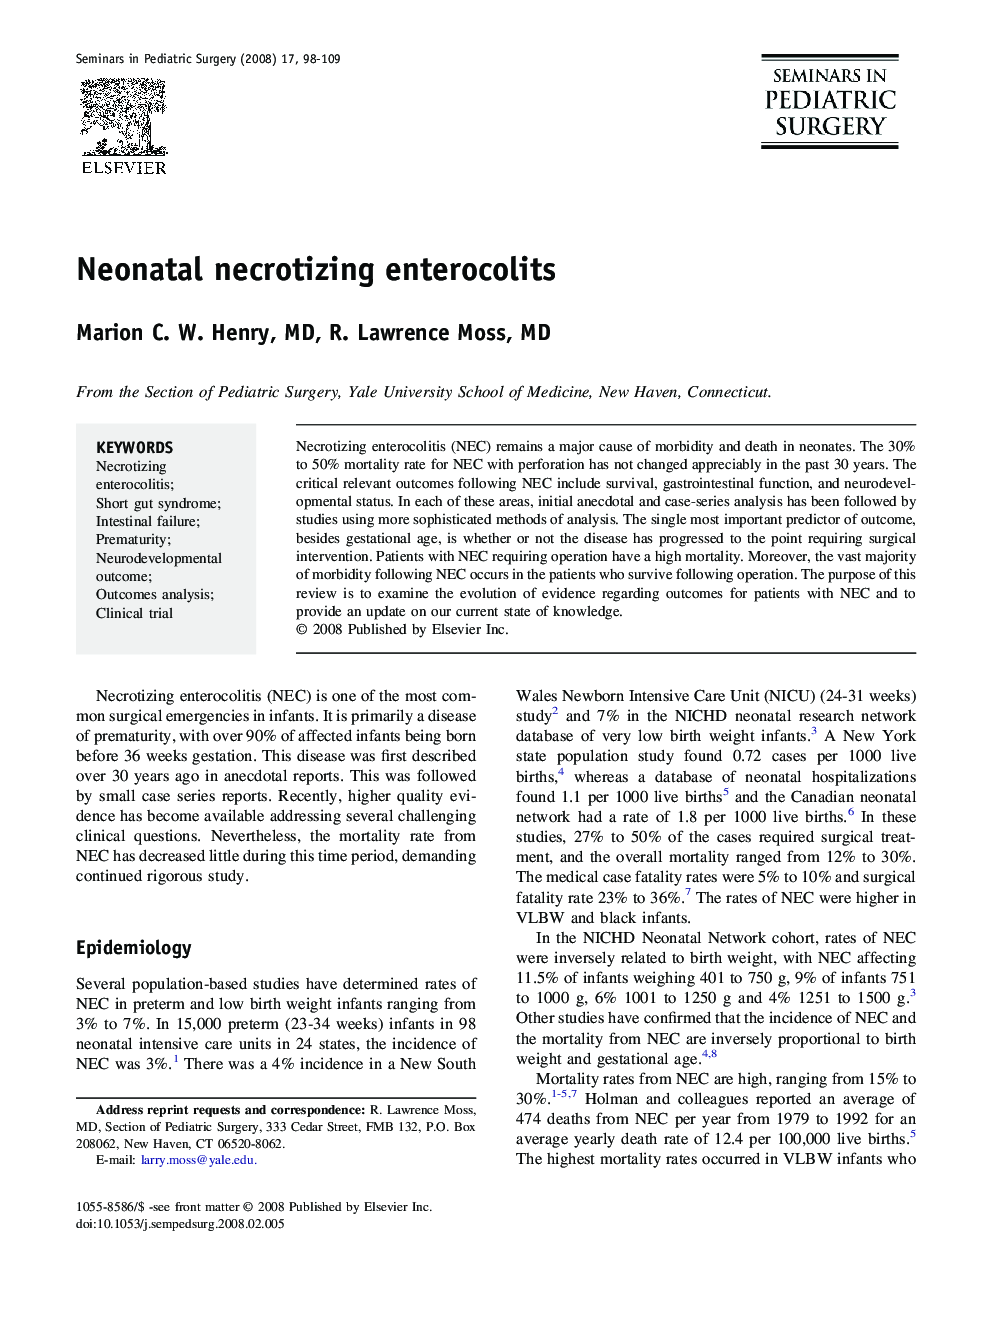 Neonatal necrotizing enterocolits